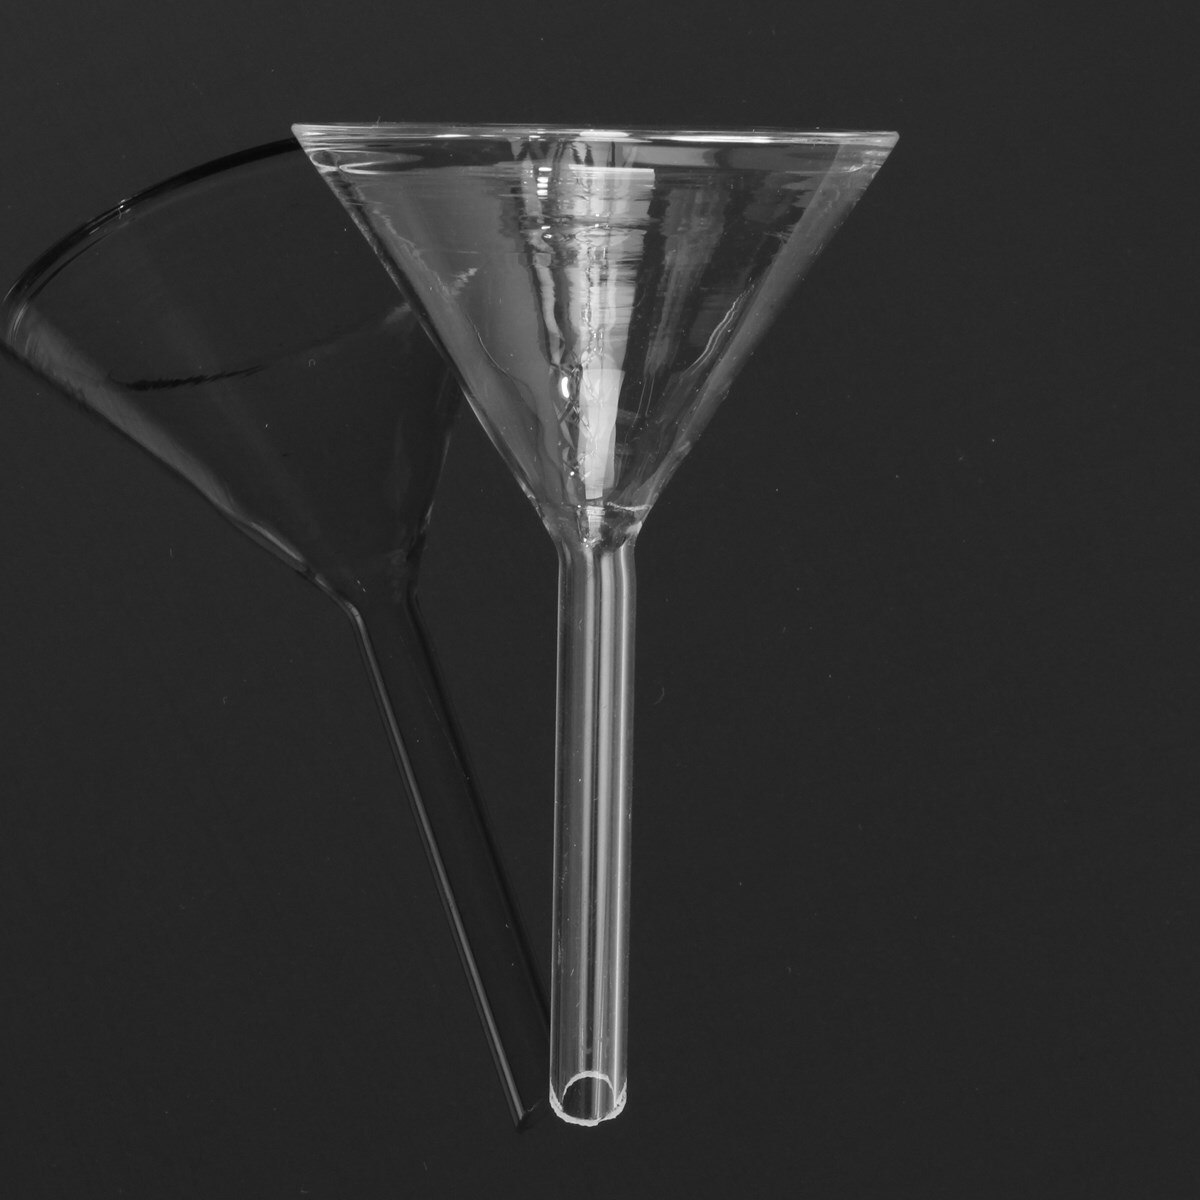 Kicute 1 St Beste 60mm Transparant Glas Driehoek Trechter Lab Glaswerk Laboraotry Chemie Educatief Briefpapier